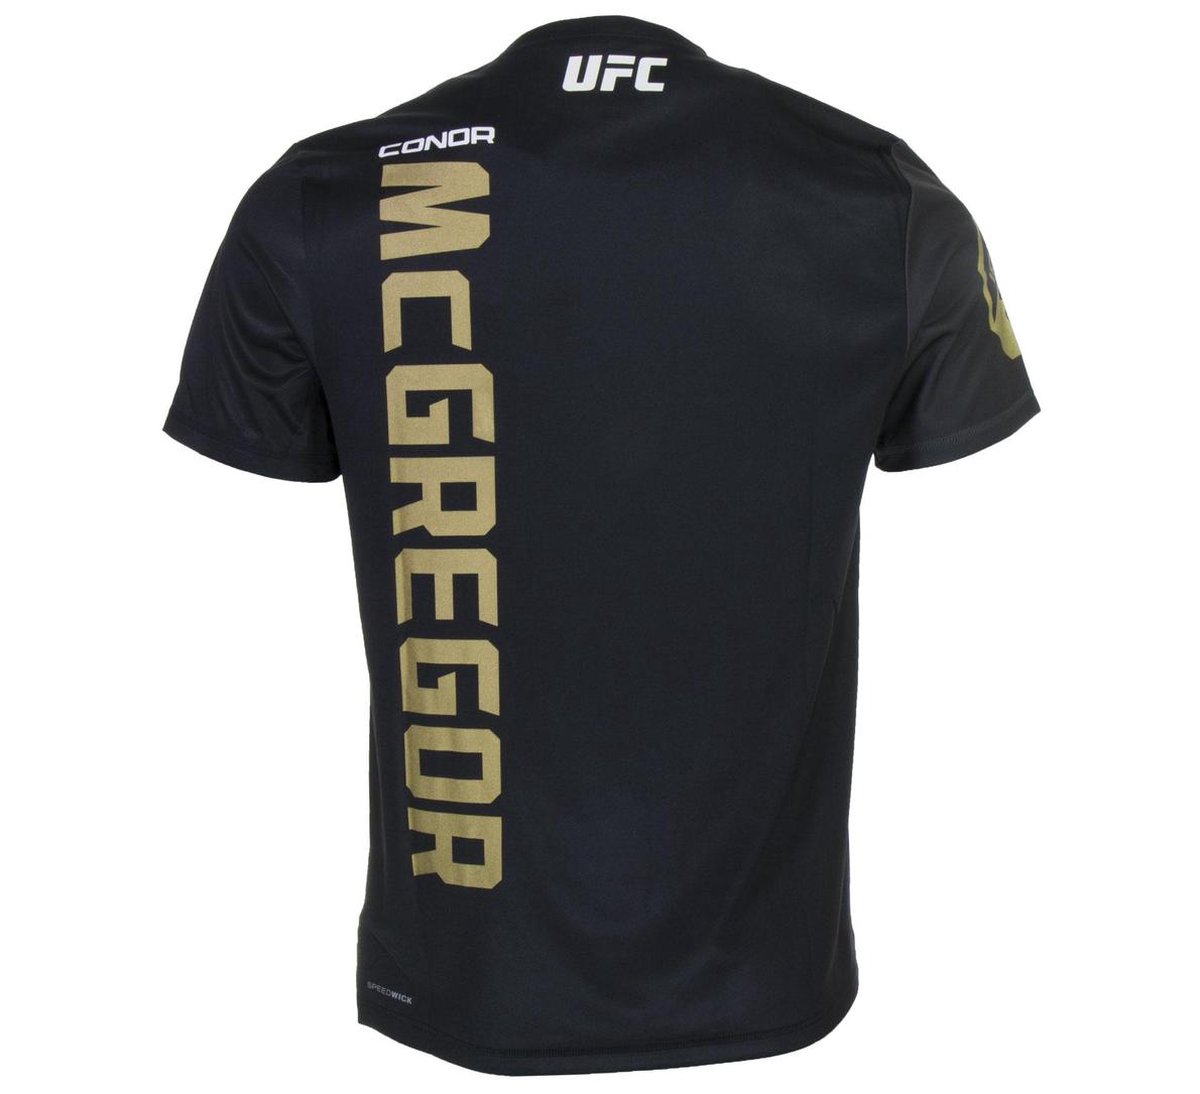 Reebok UFC Fight Kit Conor McGregor Sportshirt performance - Maat XXL -  Mannen - zwart | bol.com